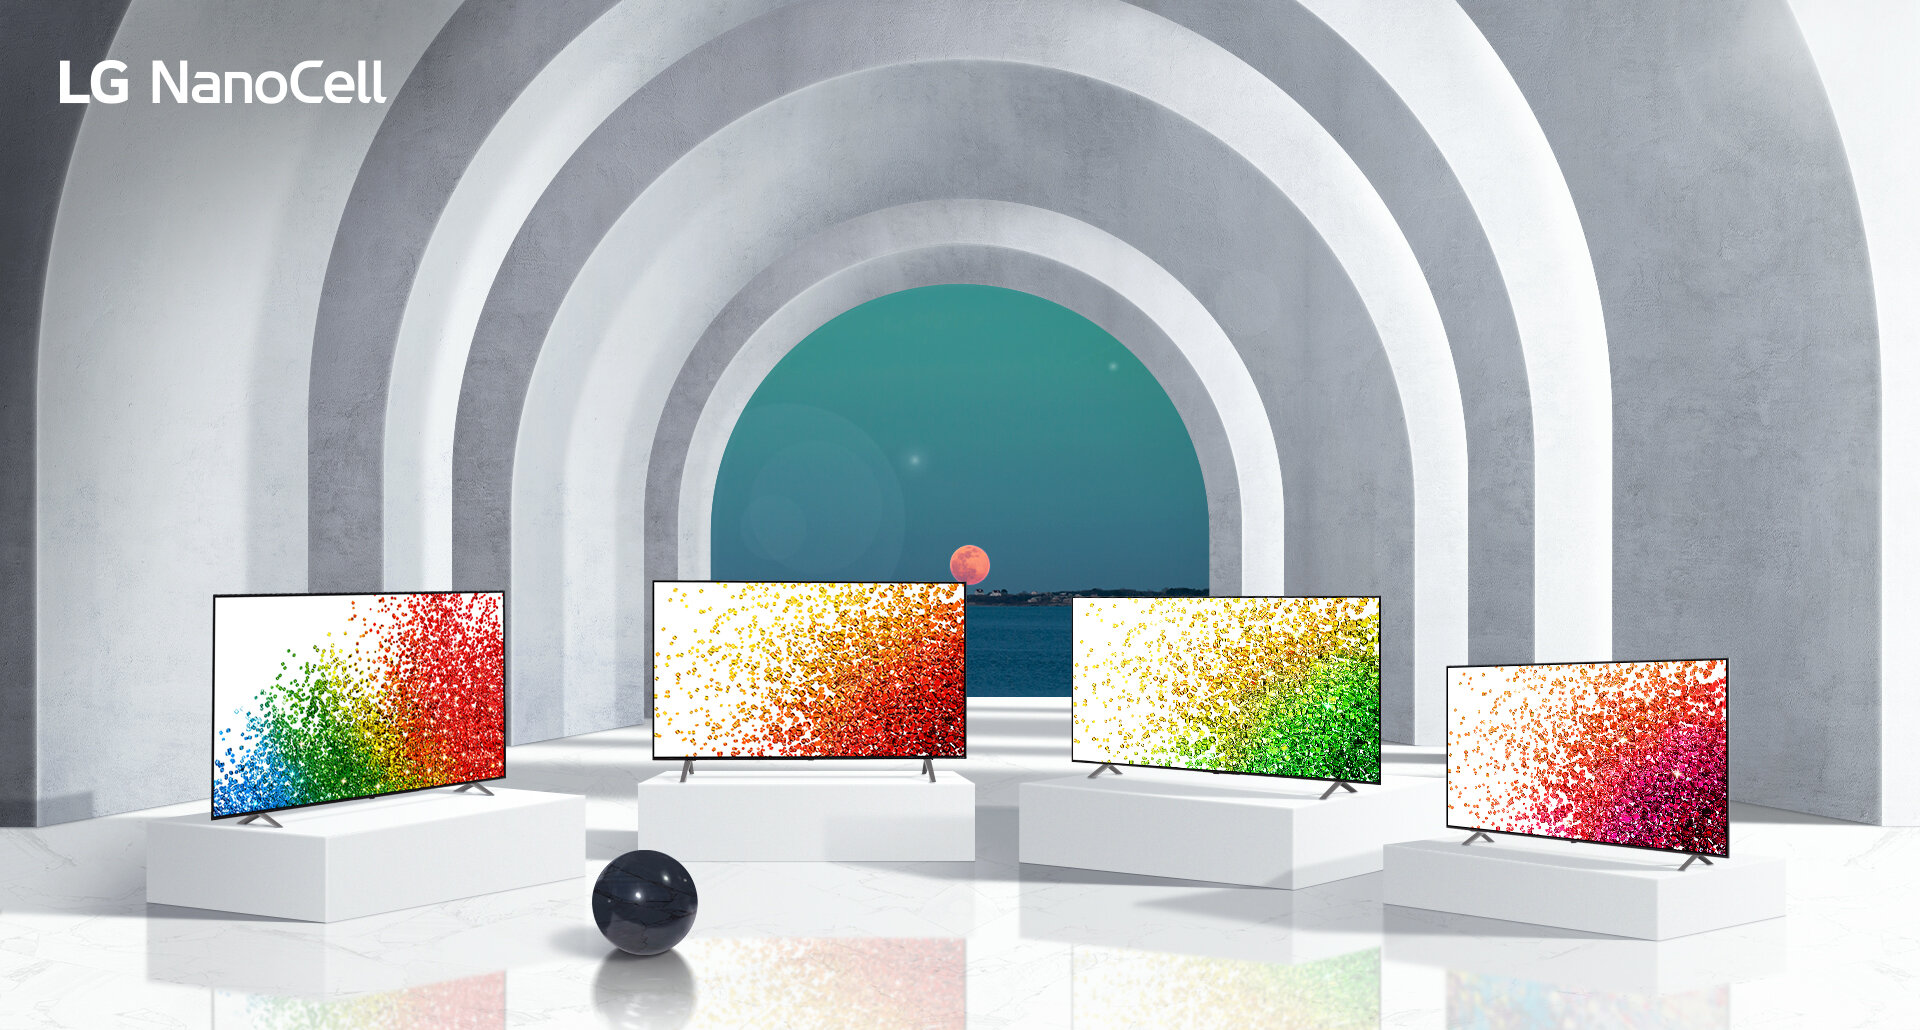 LG NanoCell TV Lineup